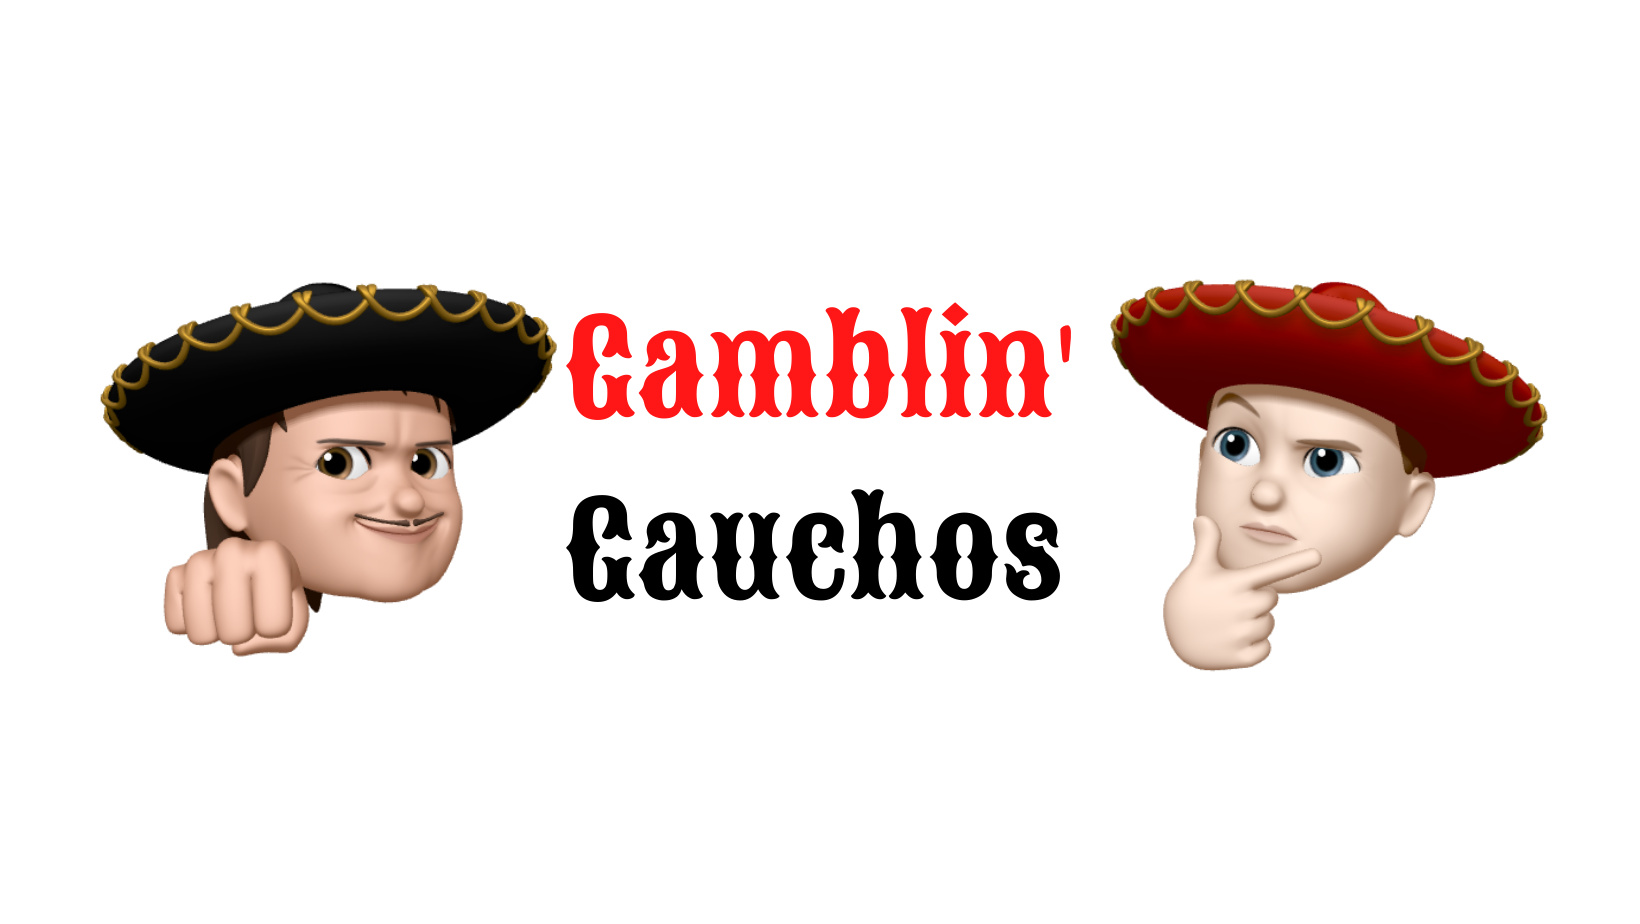 Gamblin’ Gauchos React to the Joey McGuire Hire